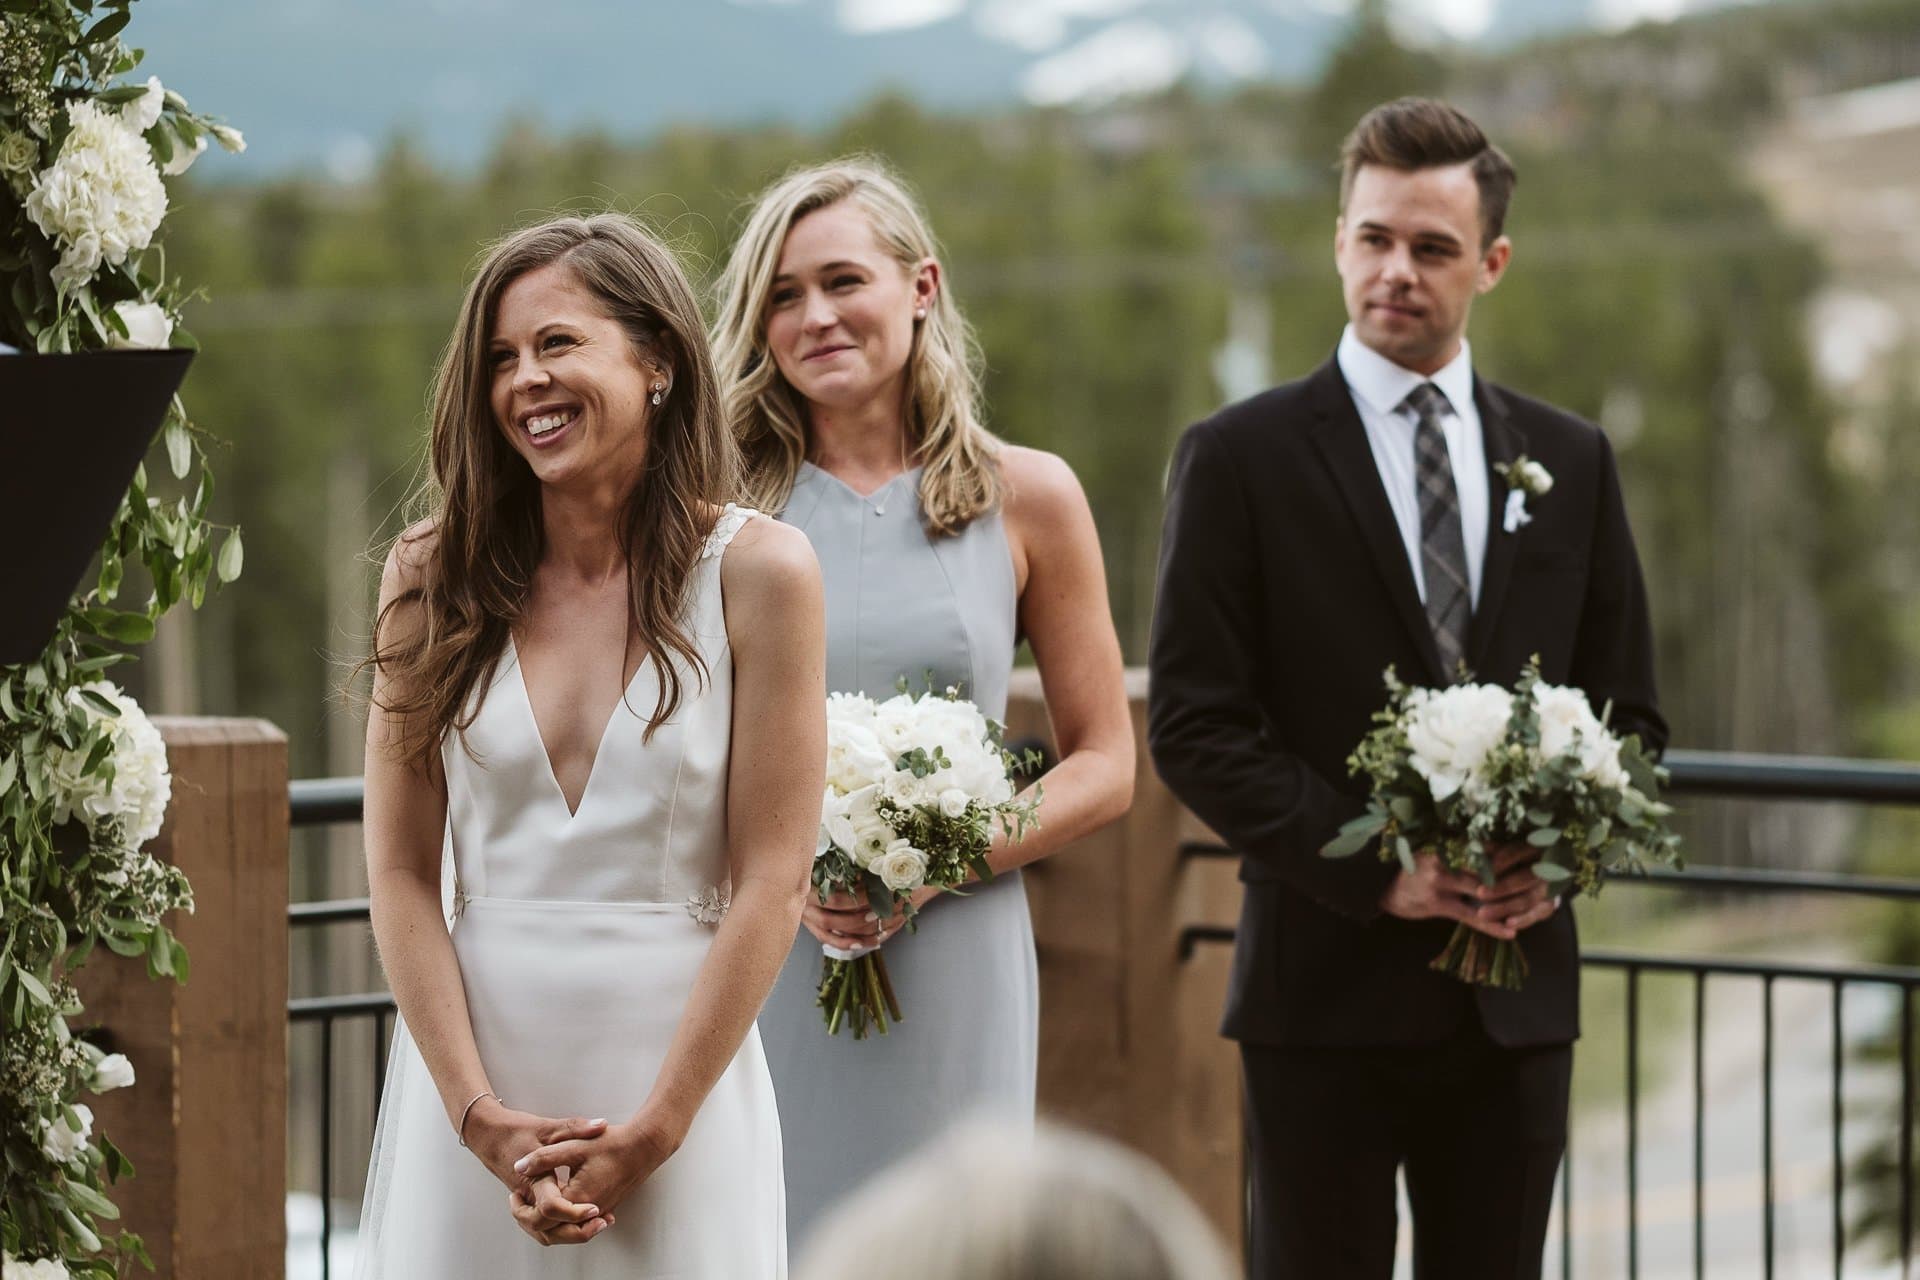 Wedding ceremony at Sevens at Breckenridge Ski Resort, Colorado mountain wedding photographer